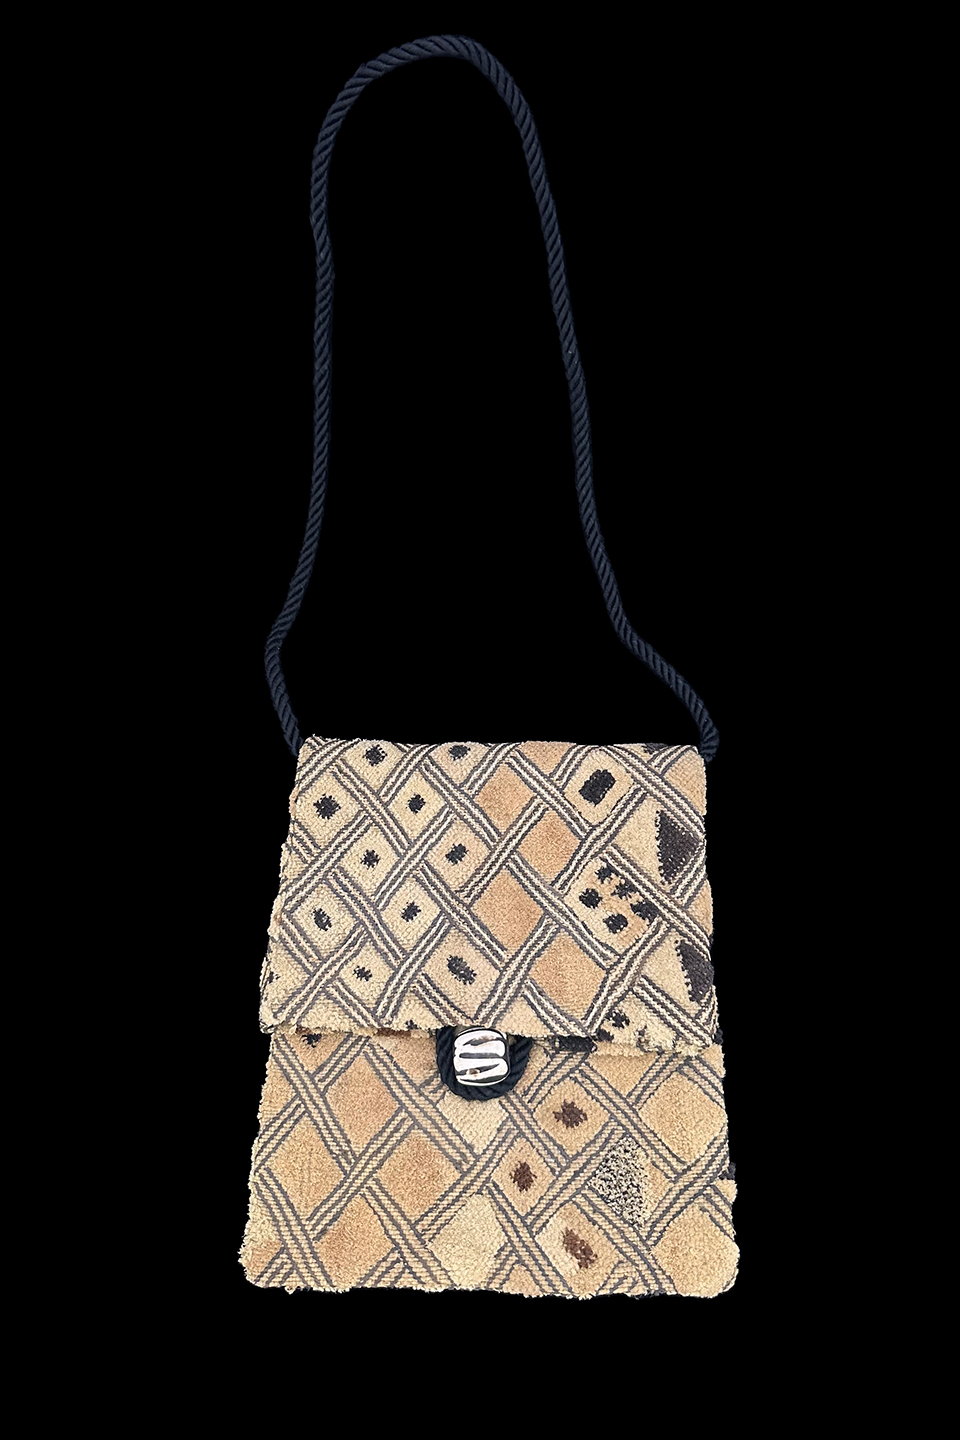 Purse/Handbag made with Kuba Cloth and a Batik Bone Closure